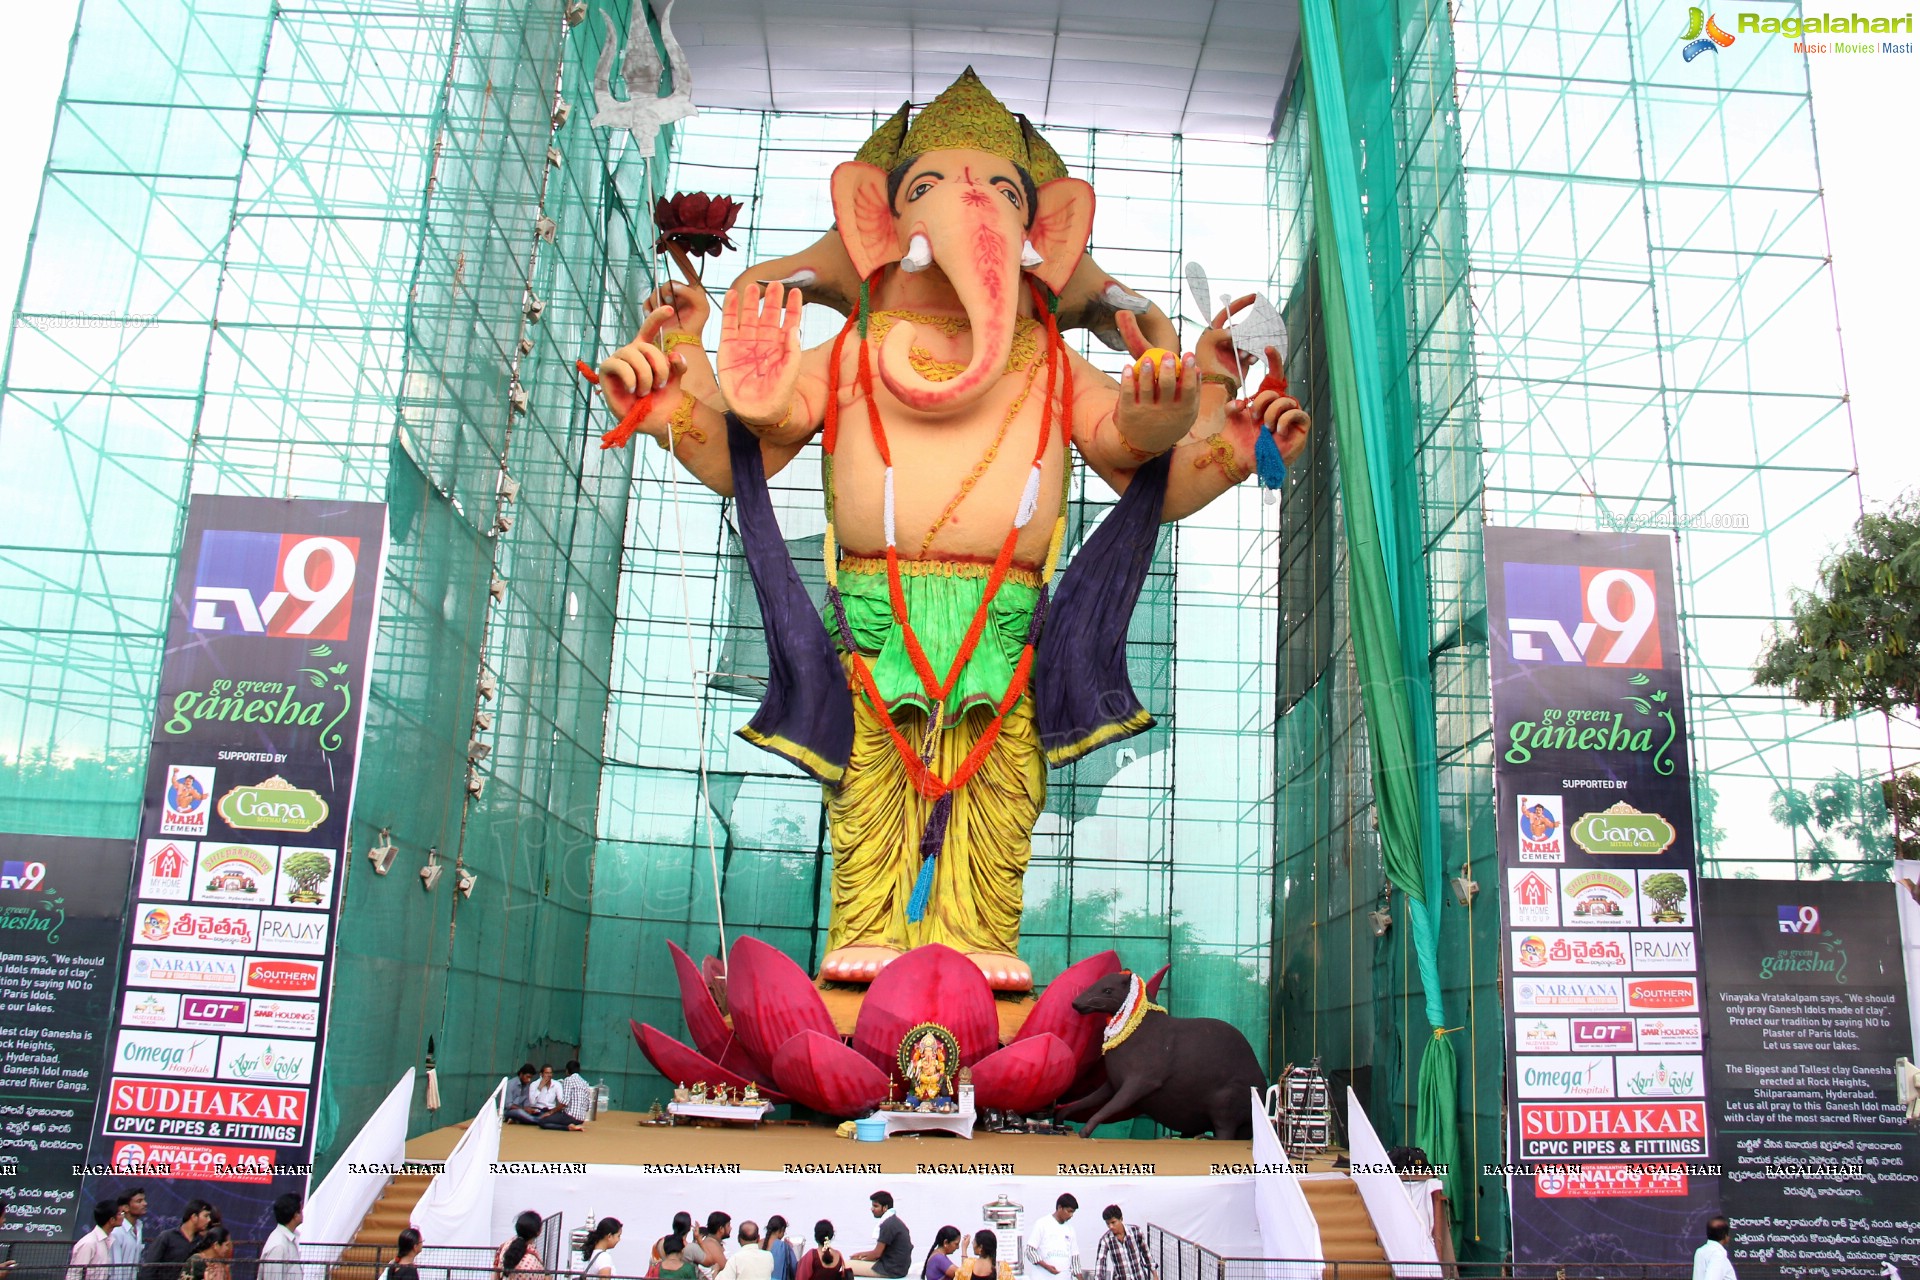 TV9 Eco Ganesh 2013, Hyderabad